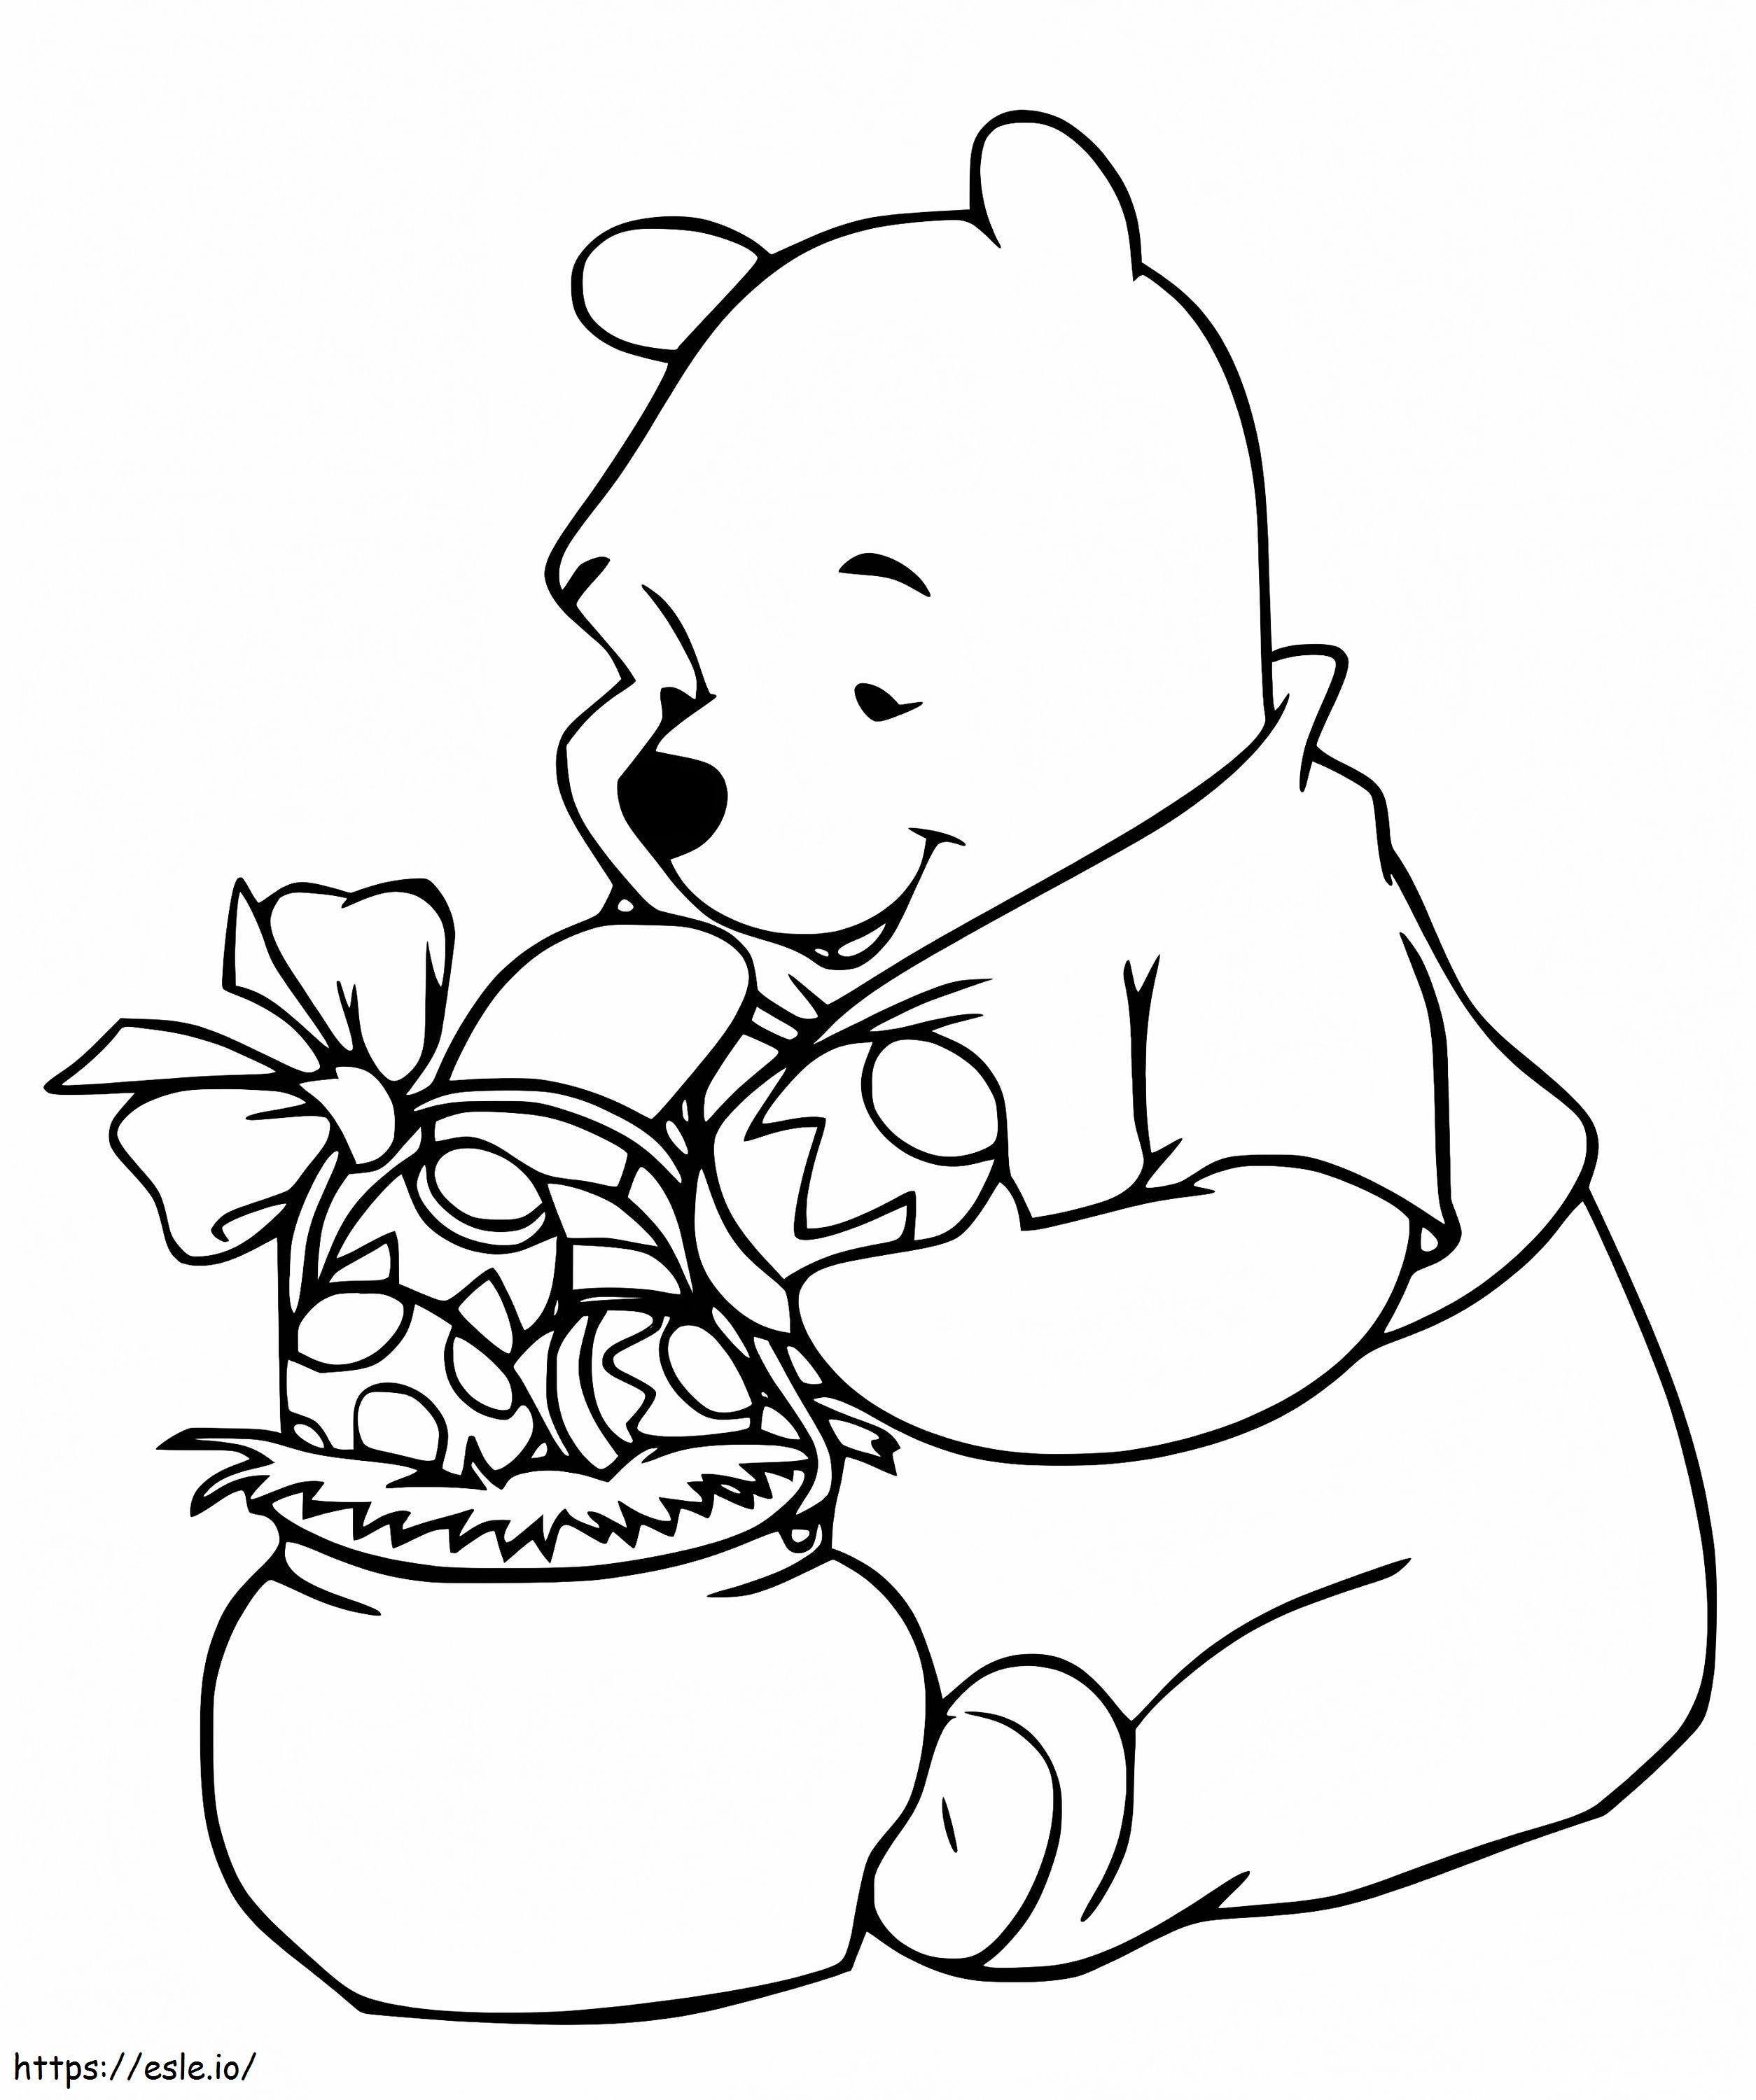 Winnie The Pooh con cesta de Pascua para colorear